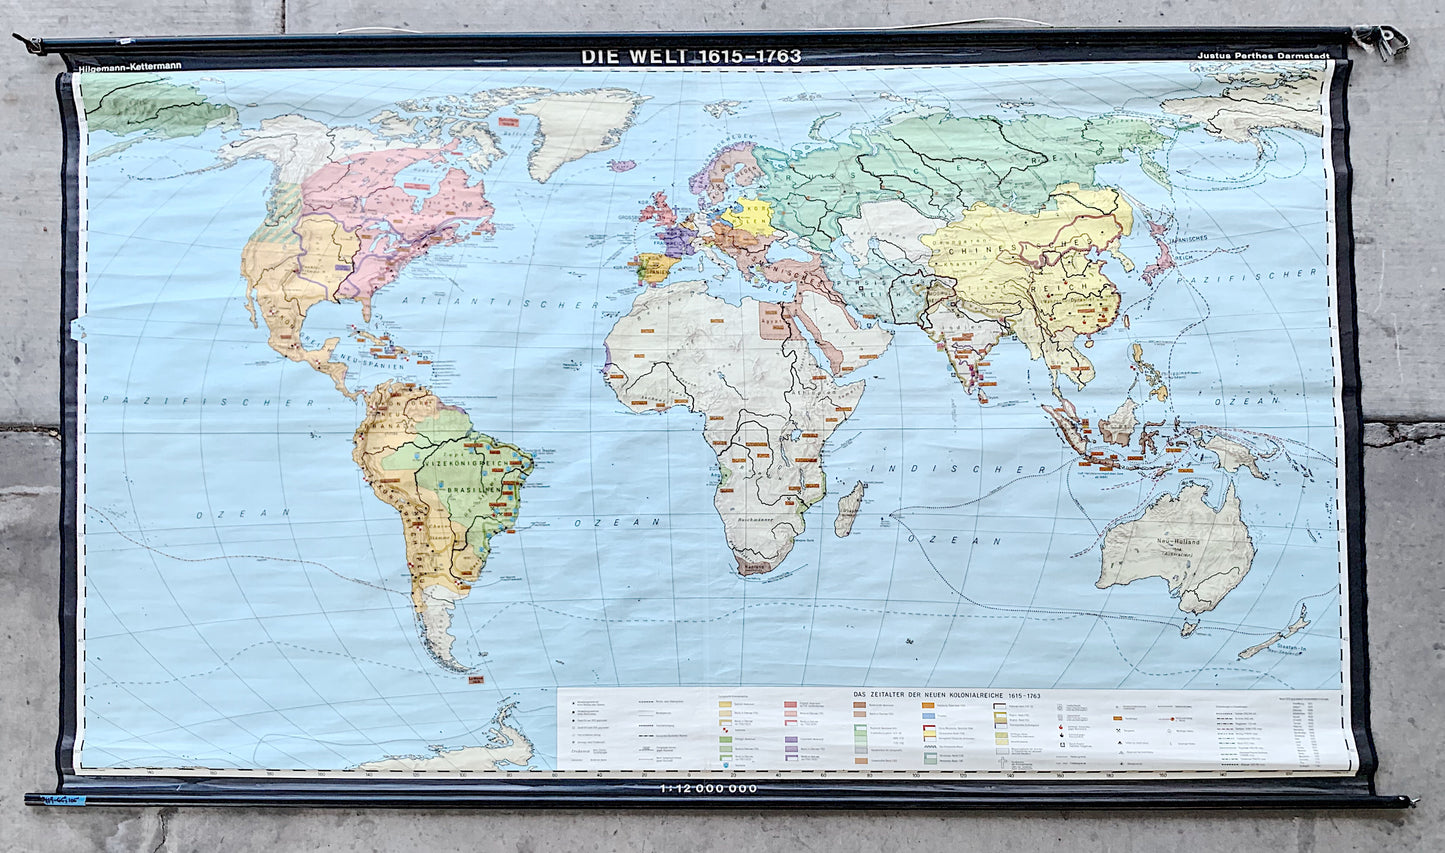 The World 1615-1763 School Map